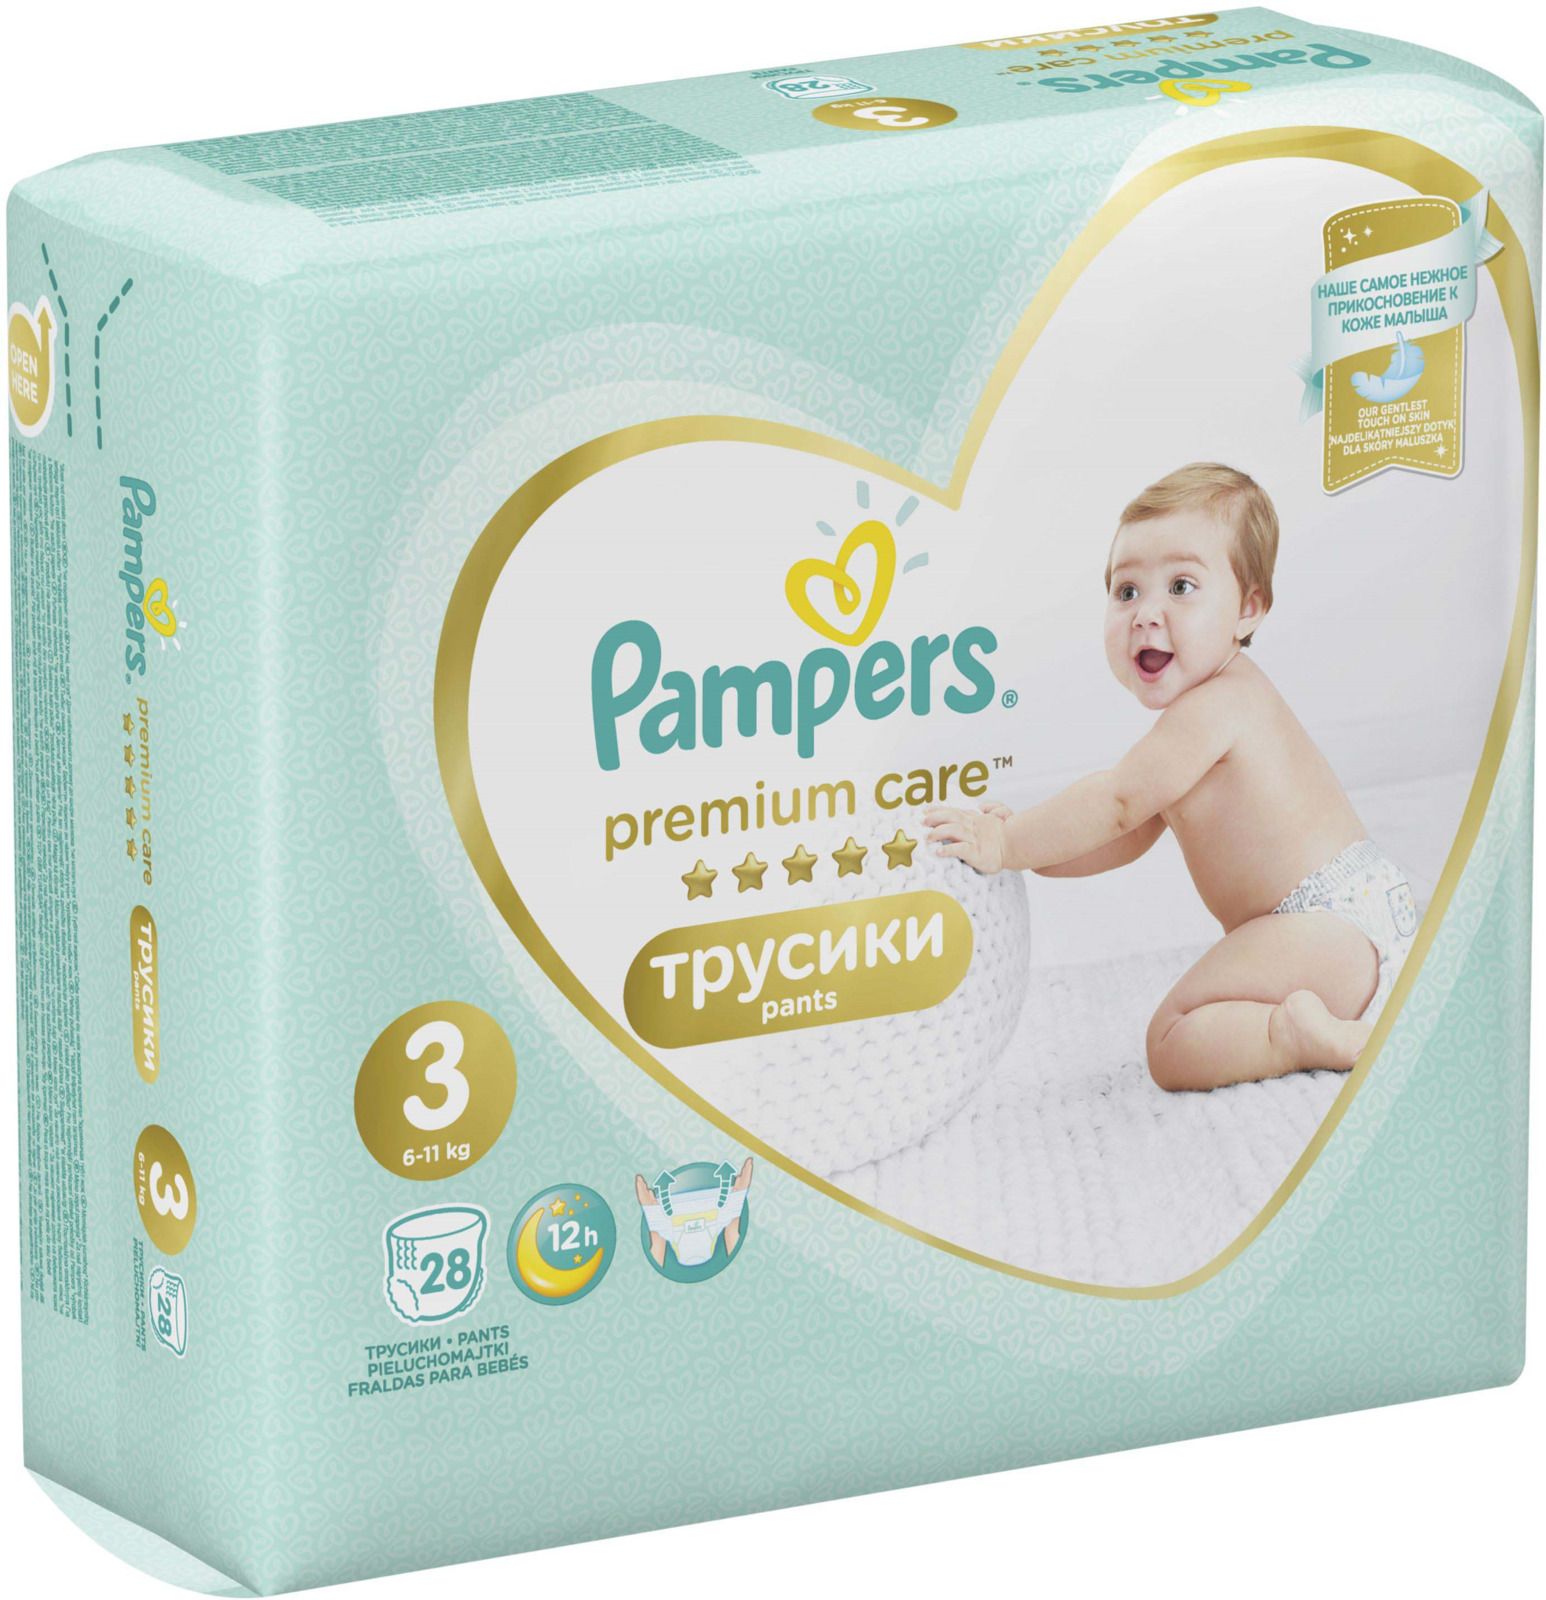 Pampers Pants  Premium Care 6-11  ( 3) 28 